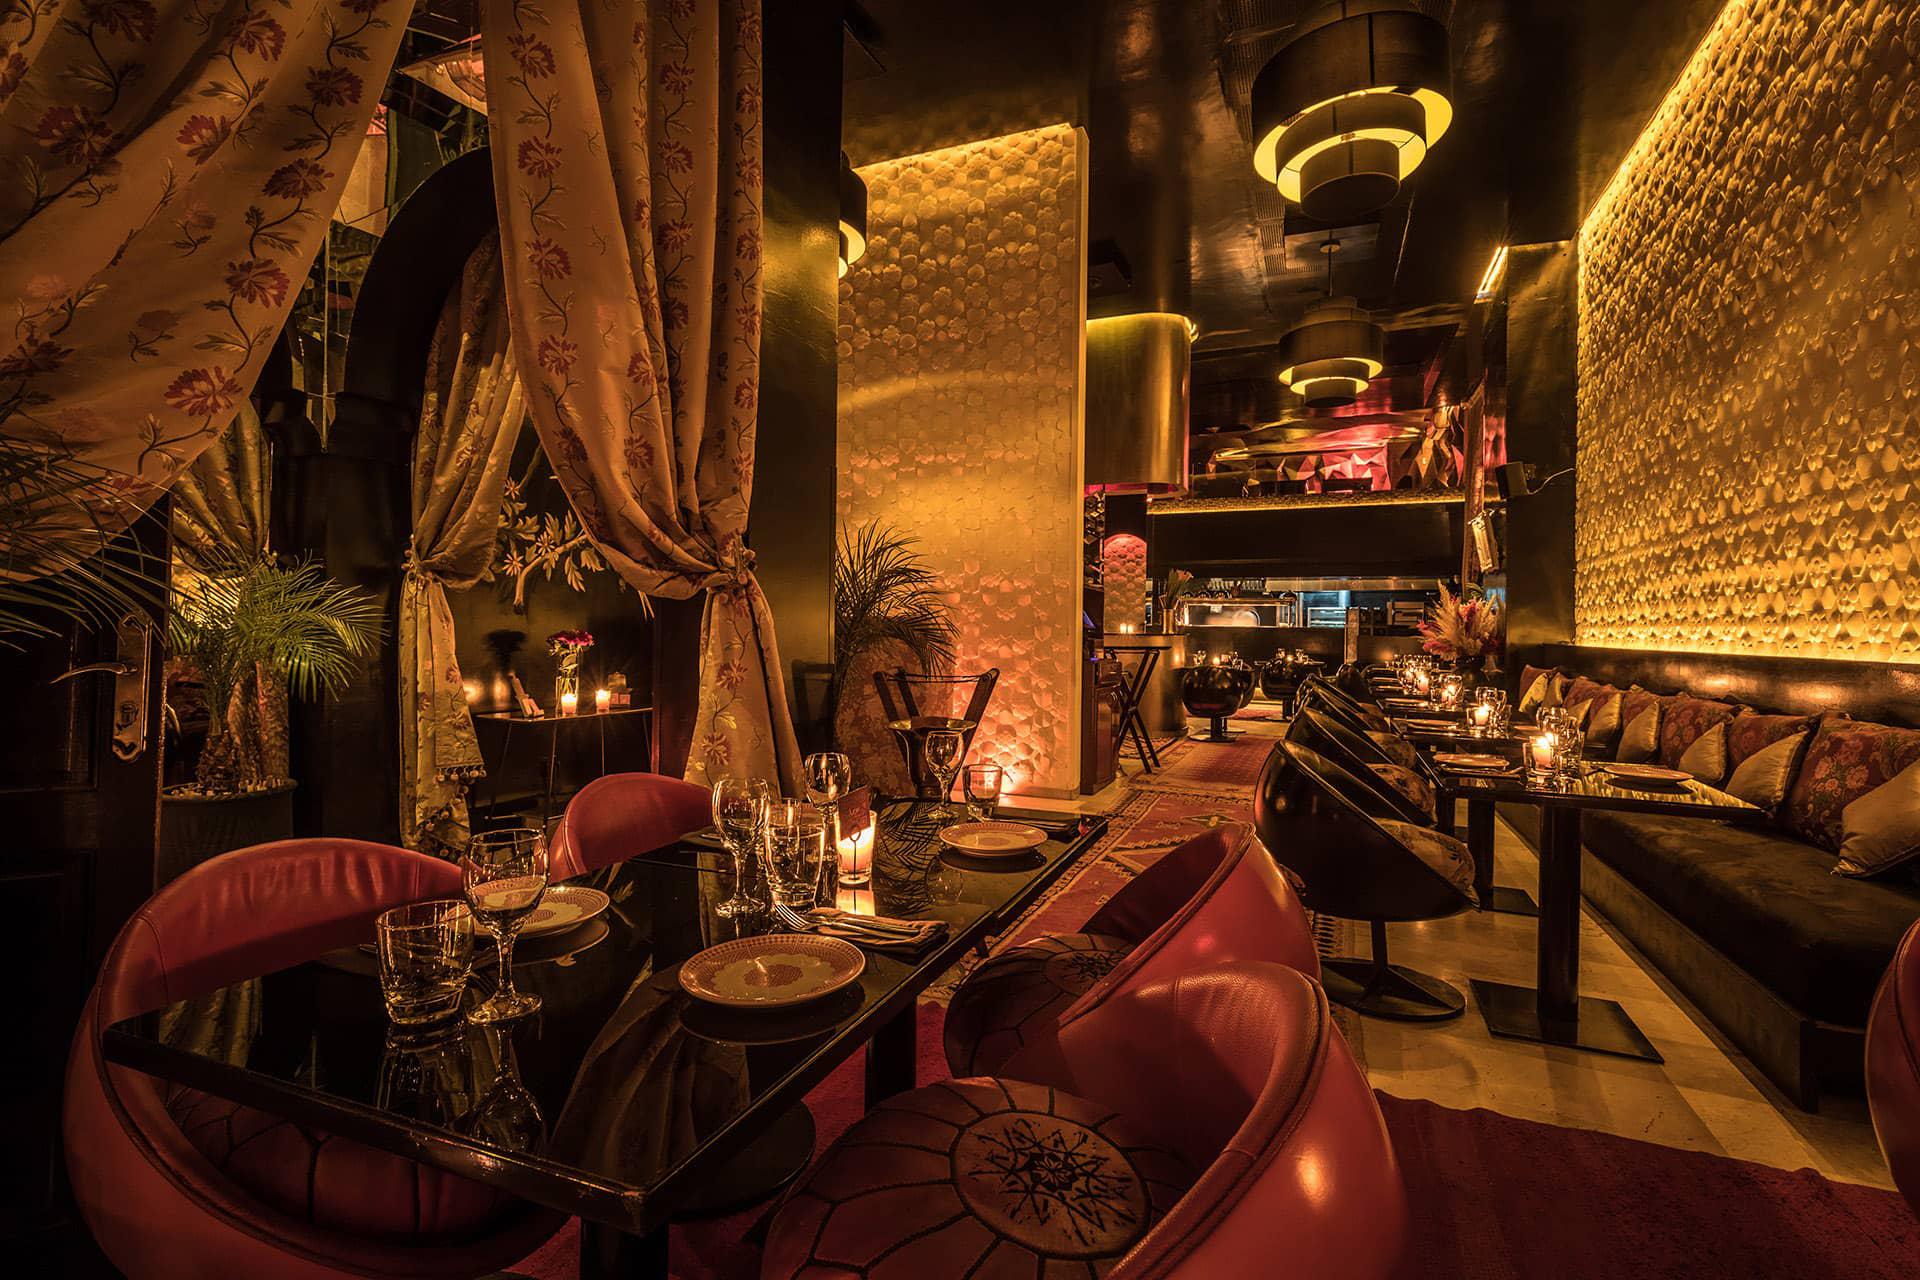 Morocco Restaurants with Italian furniture